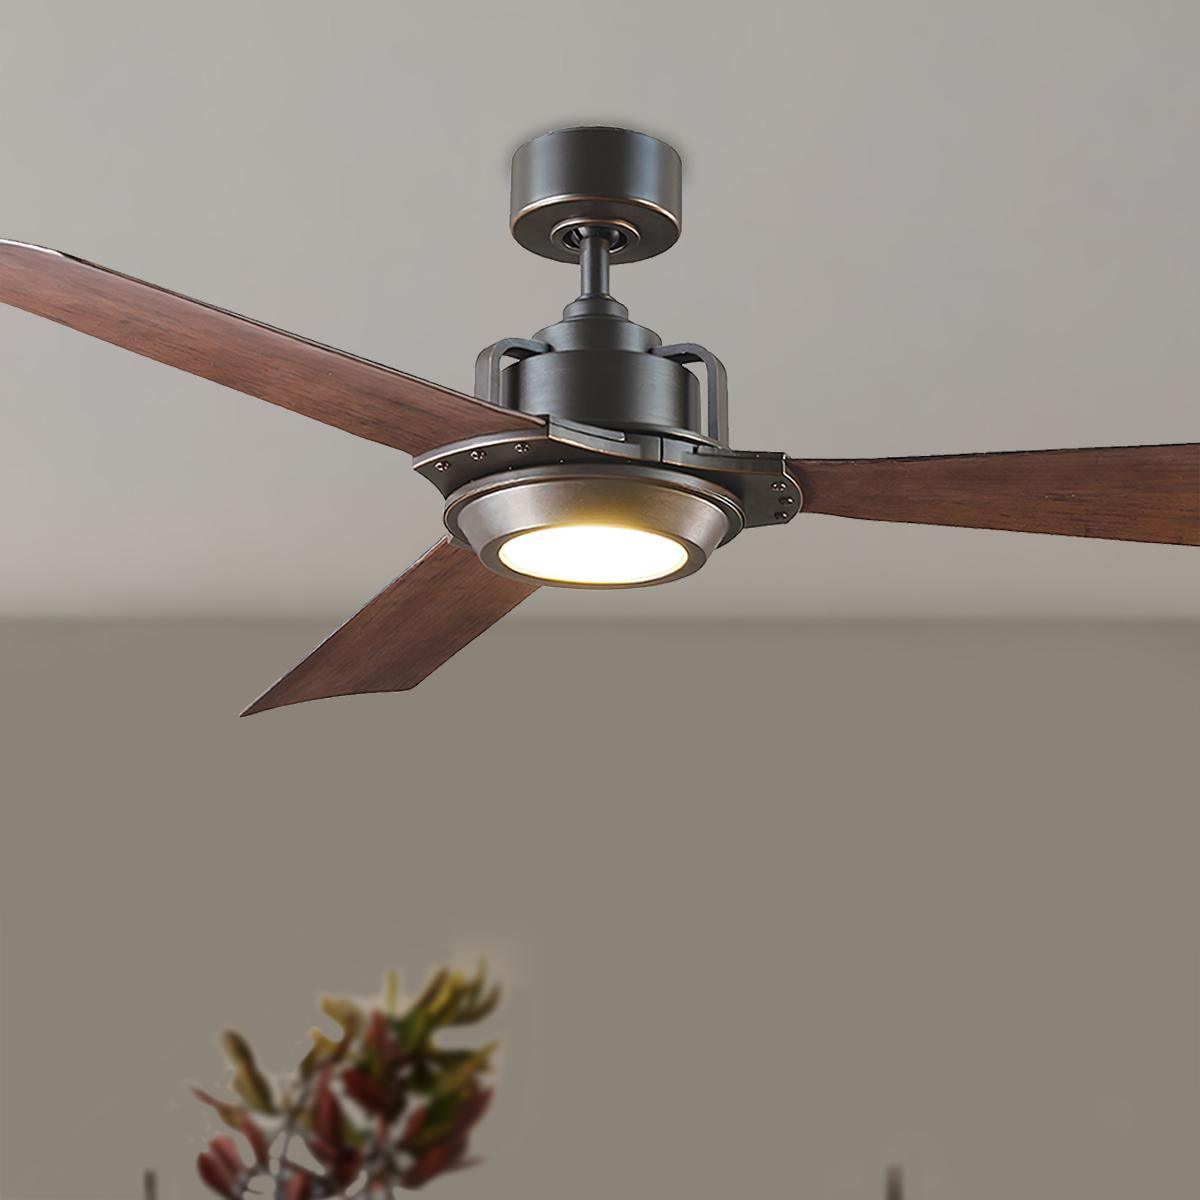 Modern Forms - Osprey 56 Inch Farmhouse Outdoor Smart Ceiling Fan